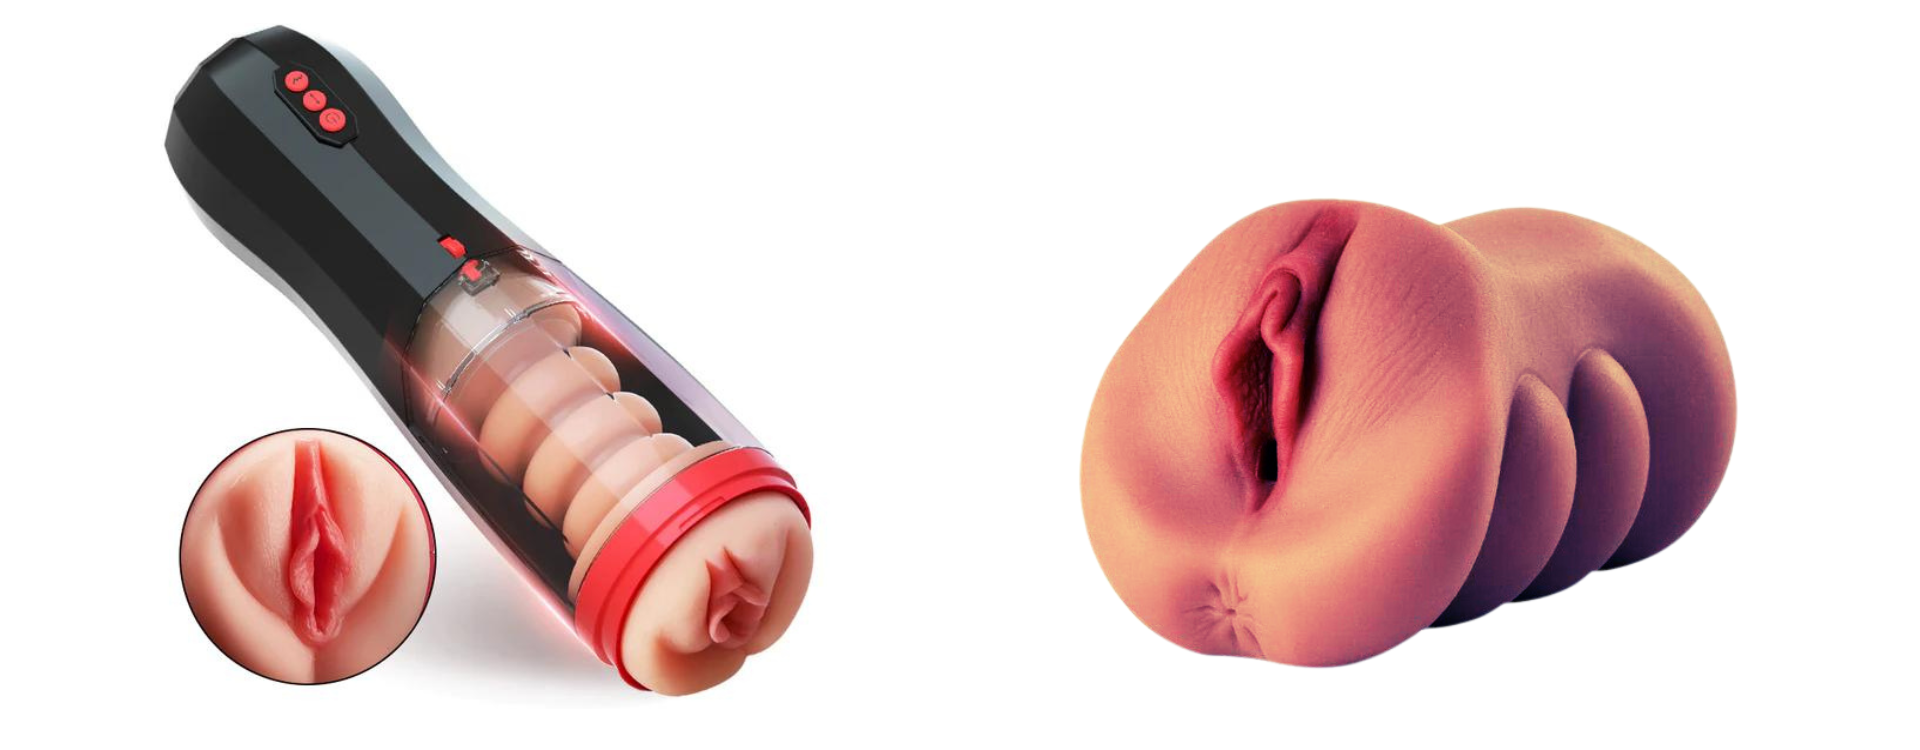 Types of Masturbation Cups vibrating vs manual